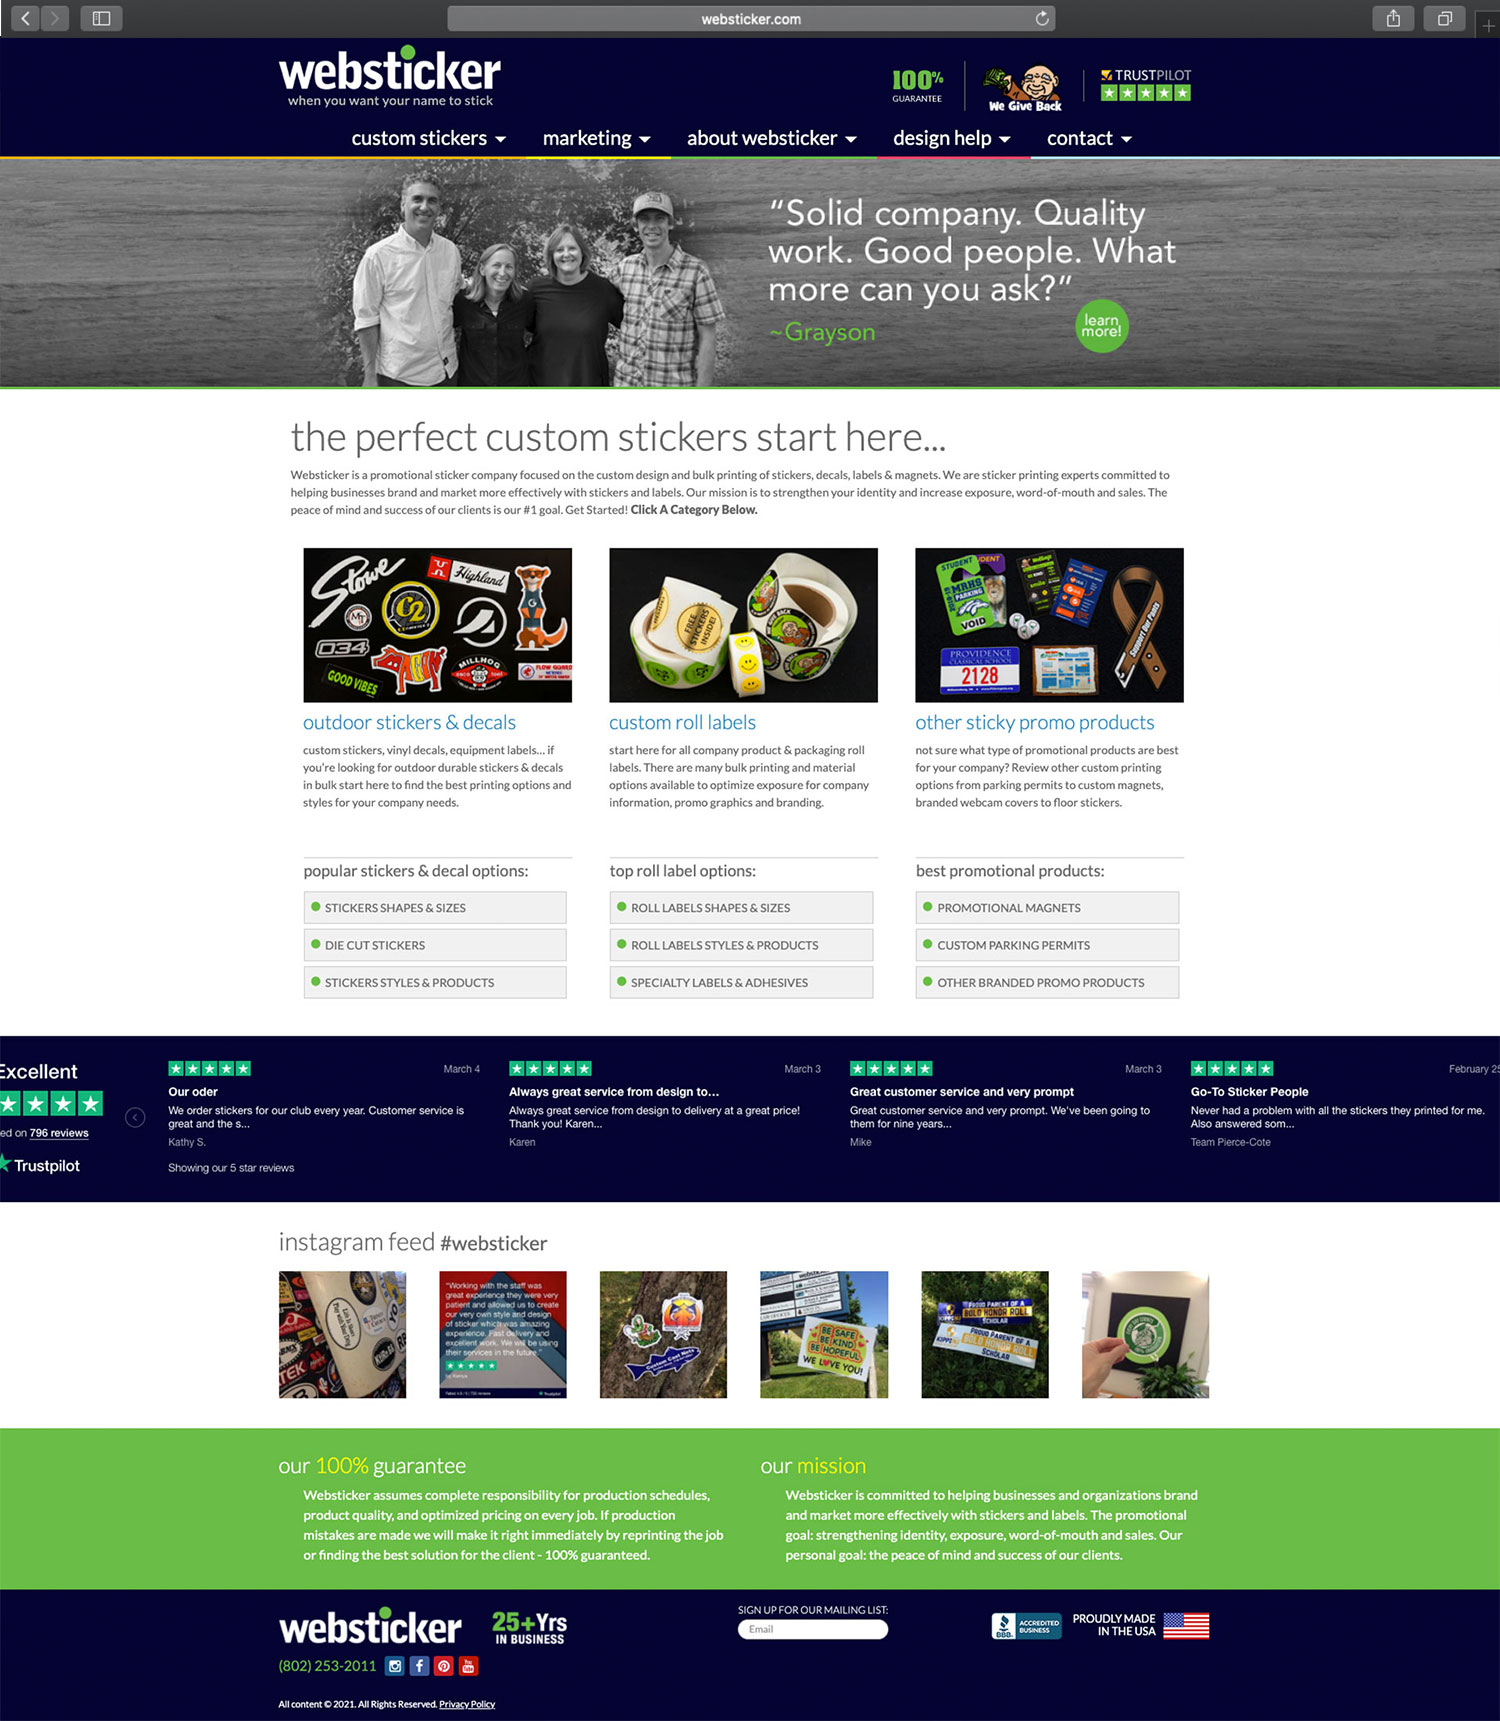 Website design and website development for Websticker - homepage view.